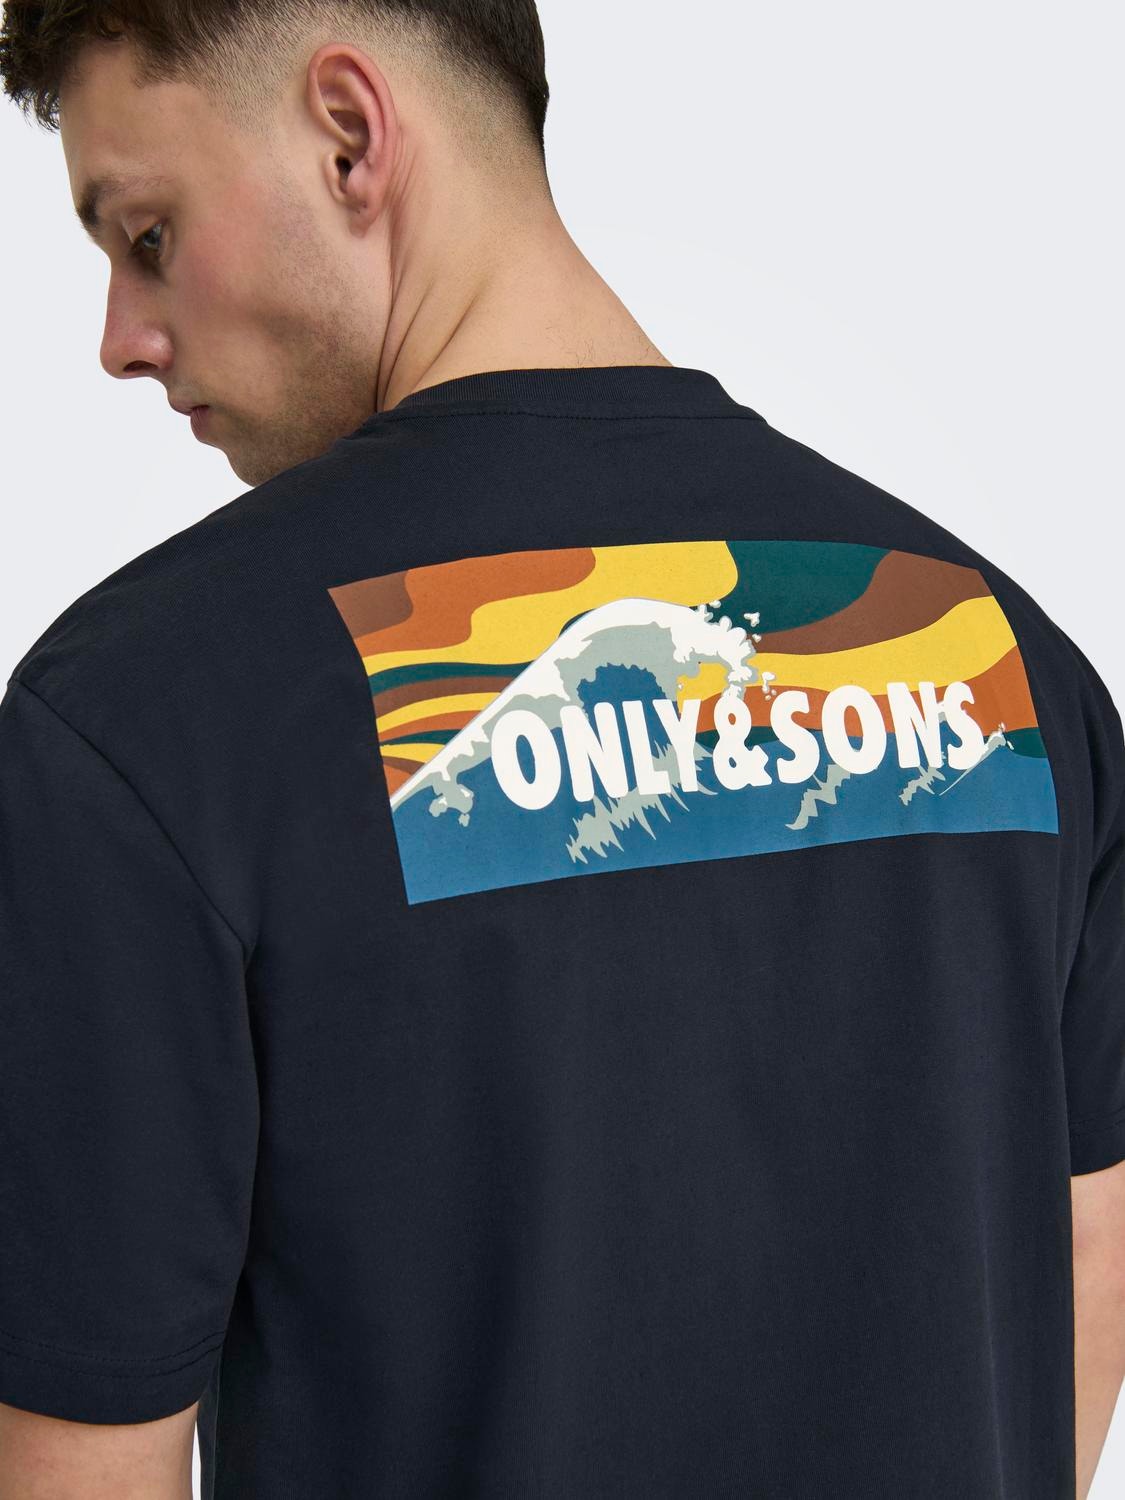 ONLY & SONS o-neck t-shirt -Dark Navy - 22029091